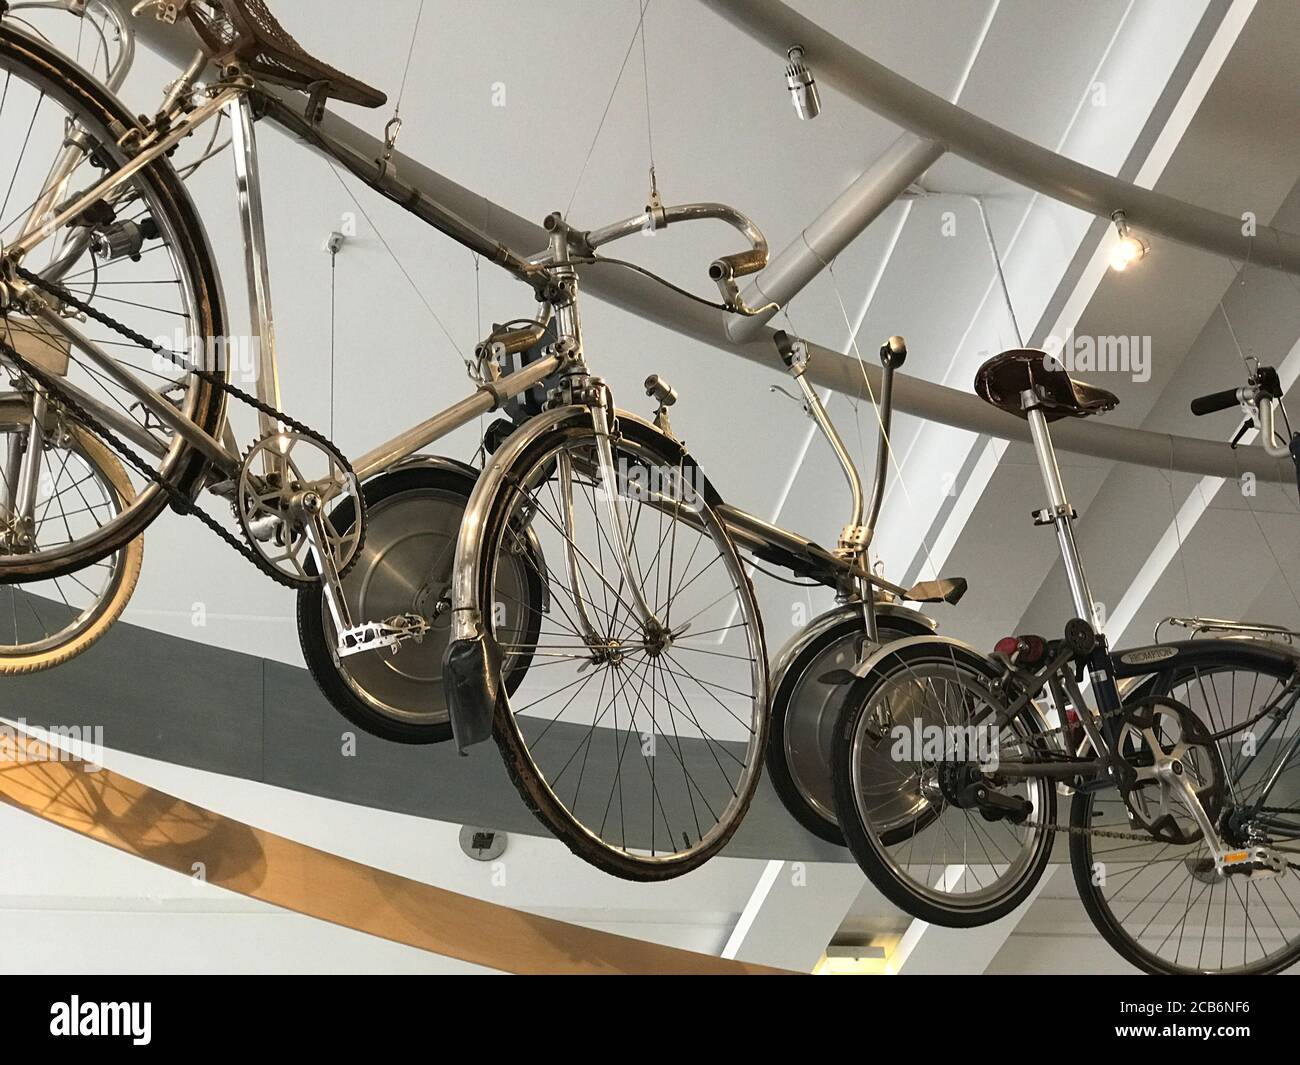 Hanging Bikes Art Installation Stock Photo